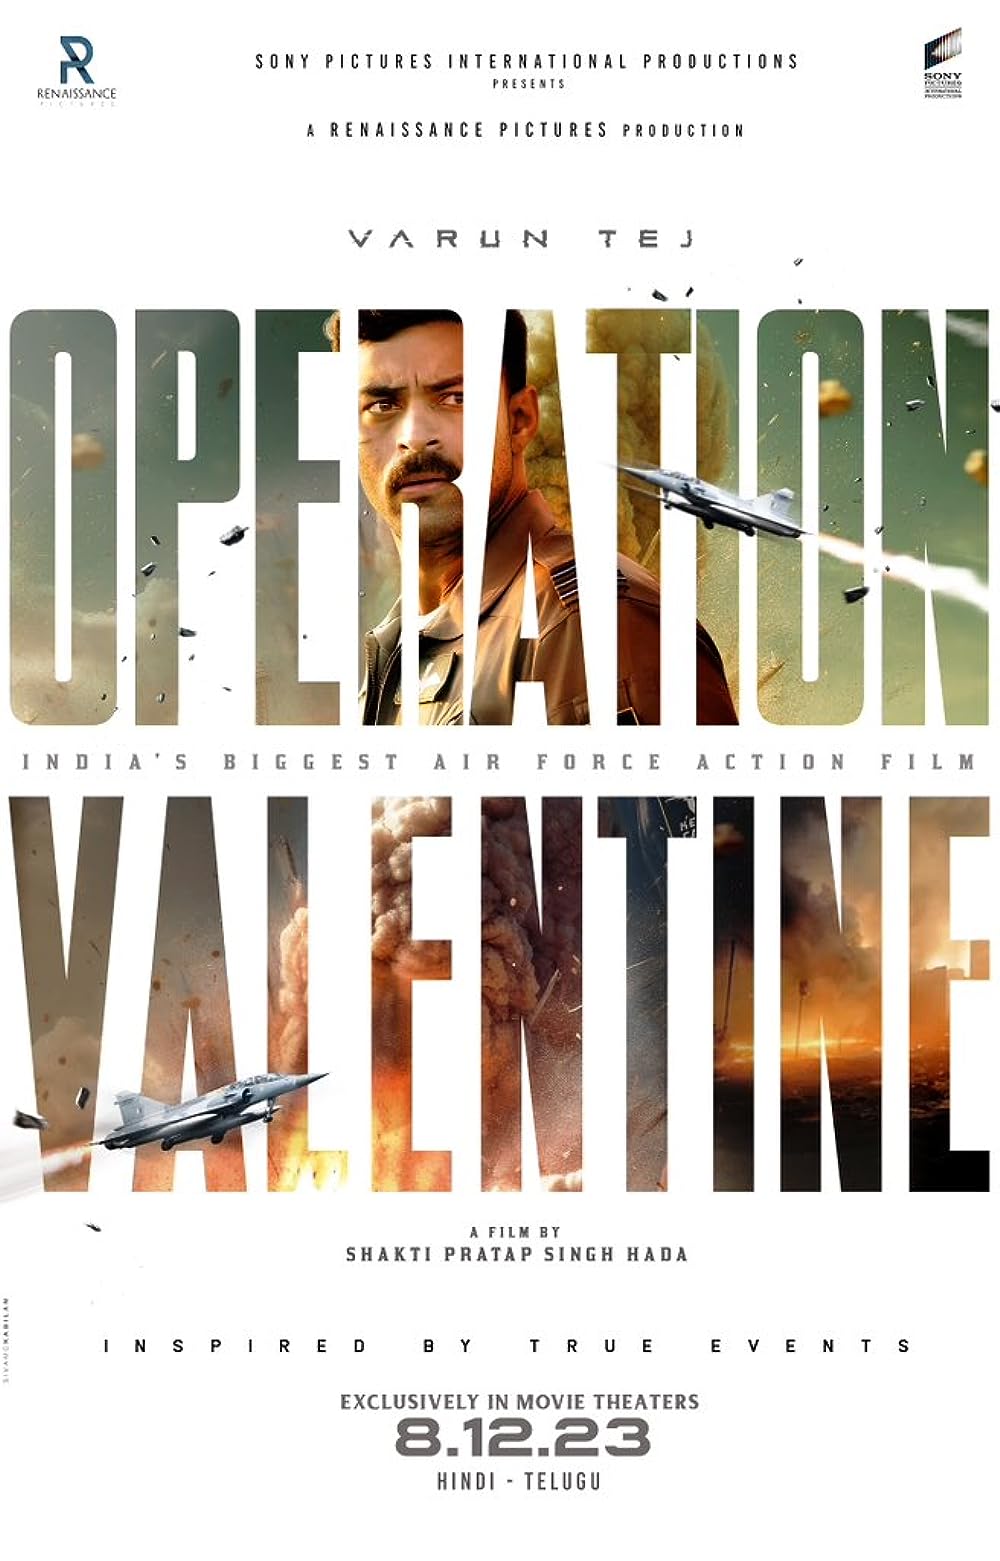 Operation Valentine Movie Review